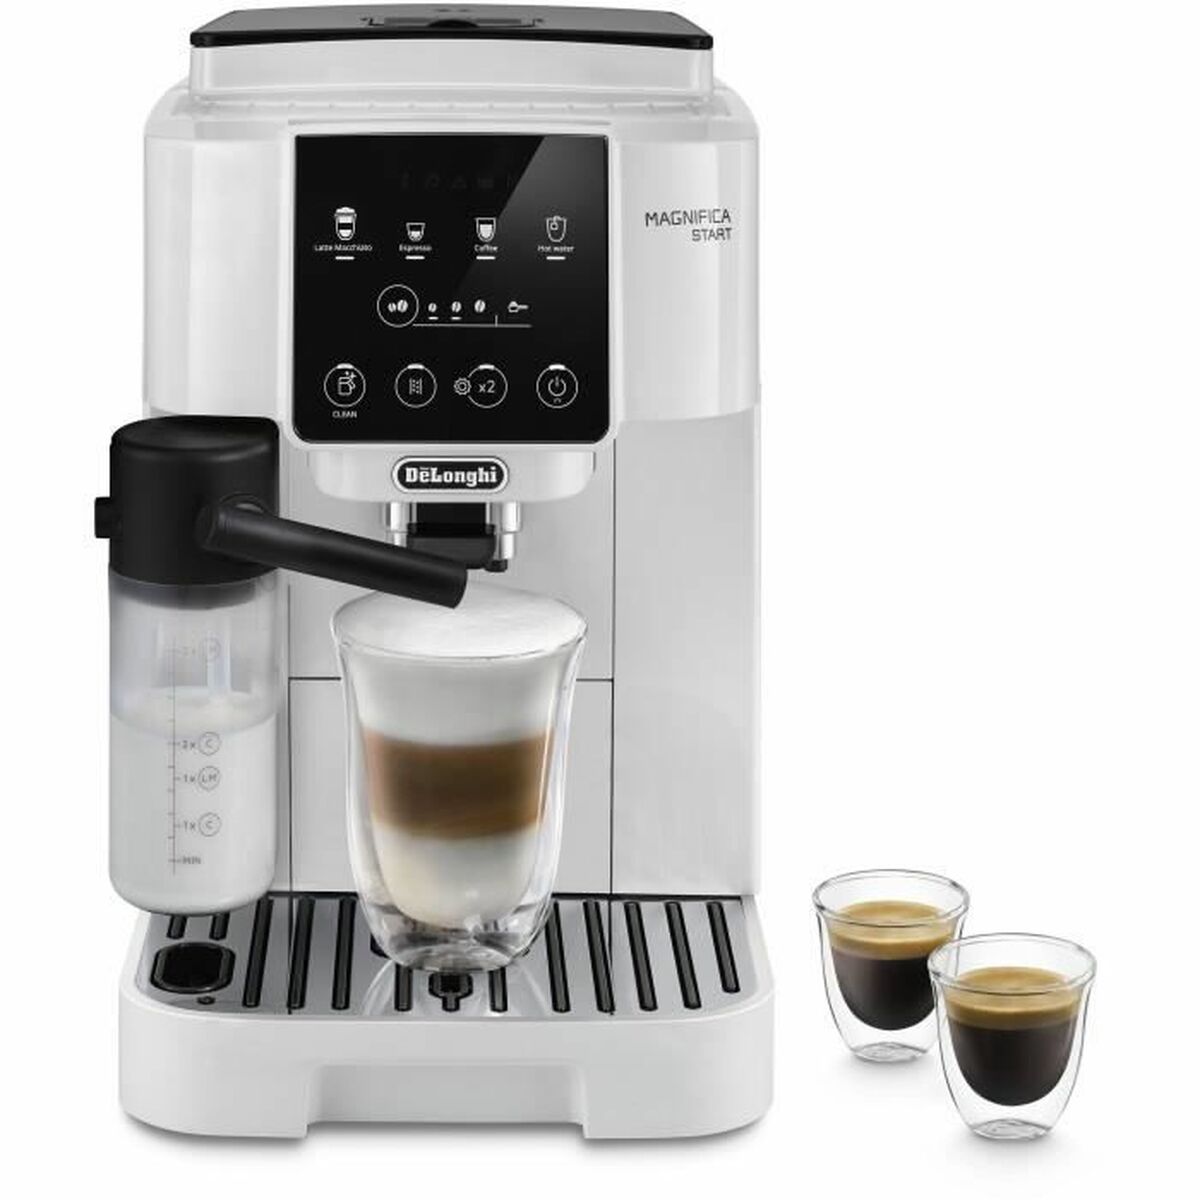 Delonghi Superautomatic Coffee Maker  1450 W 1,8 L Gbby2